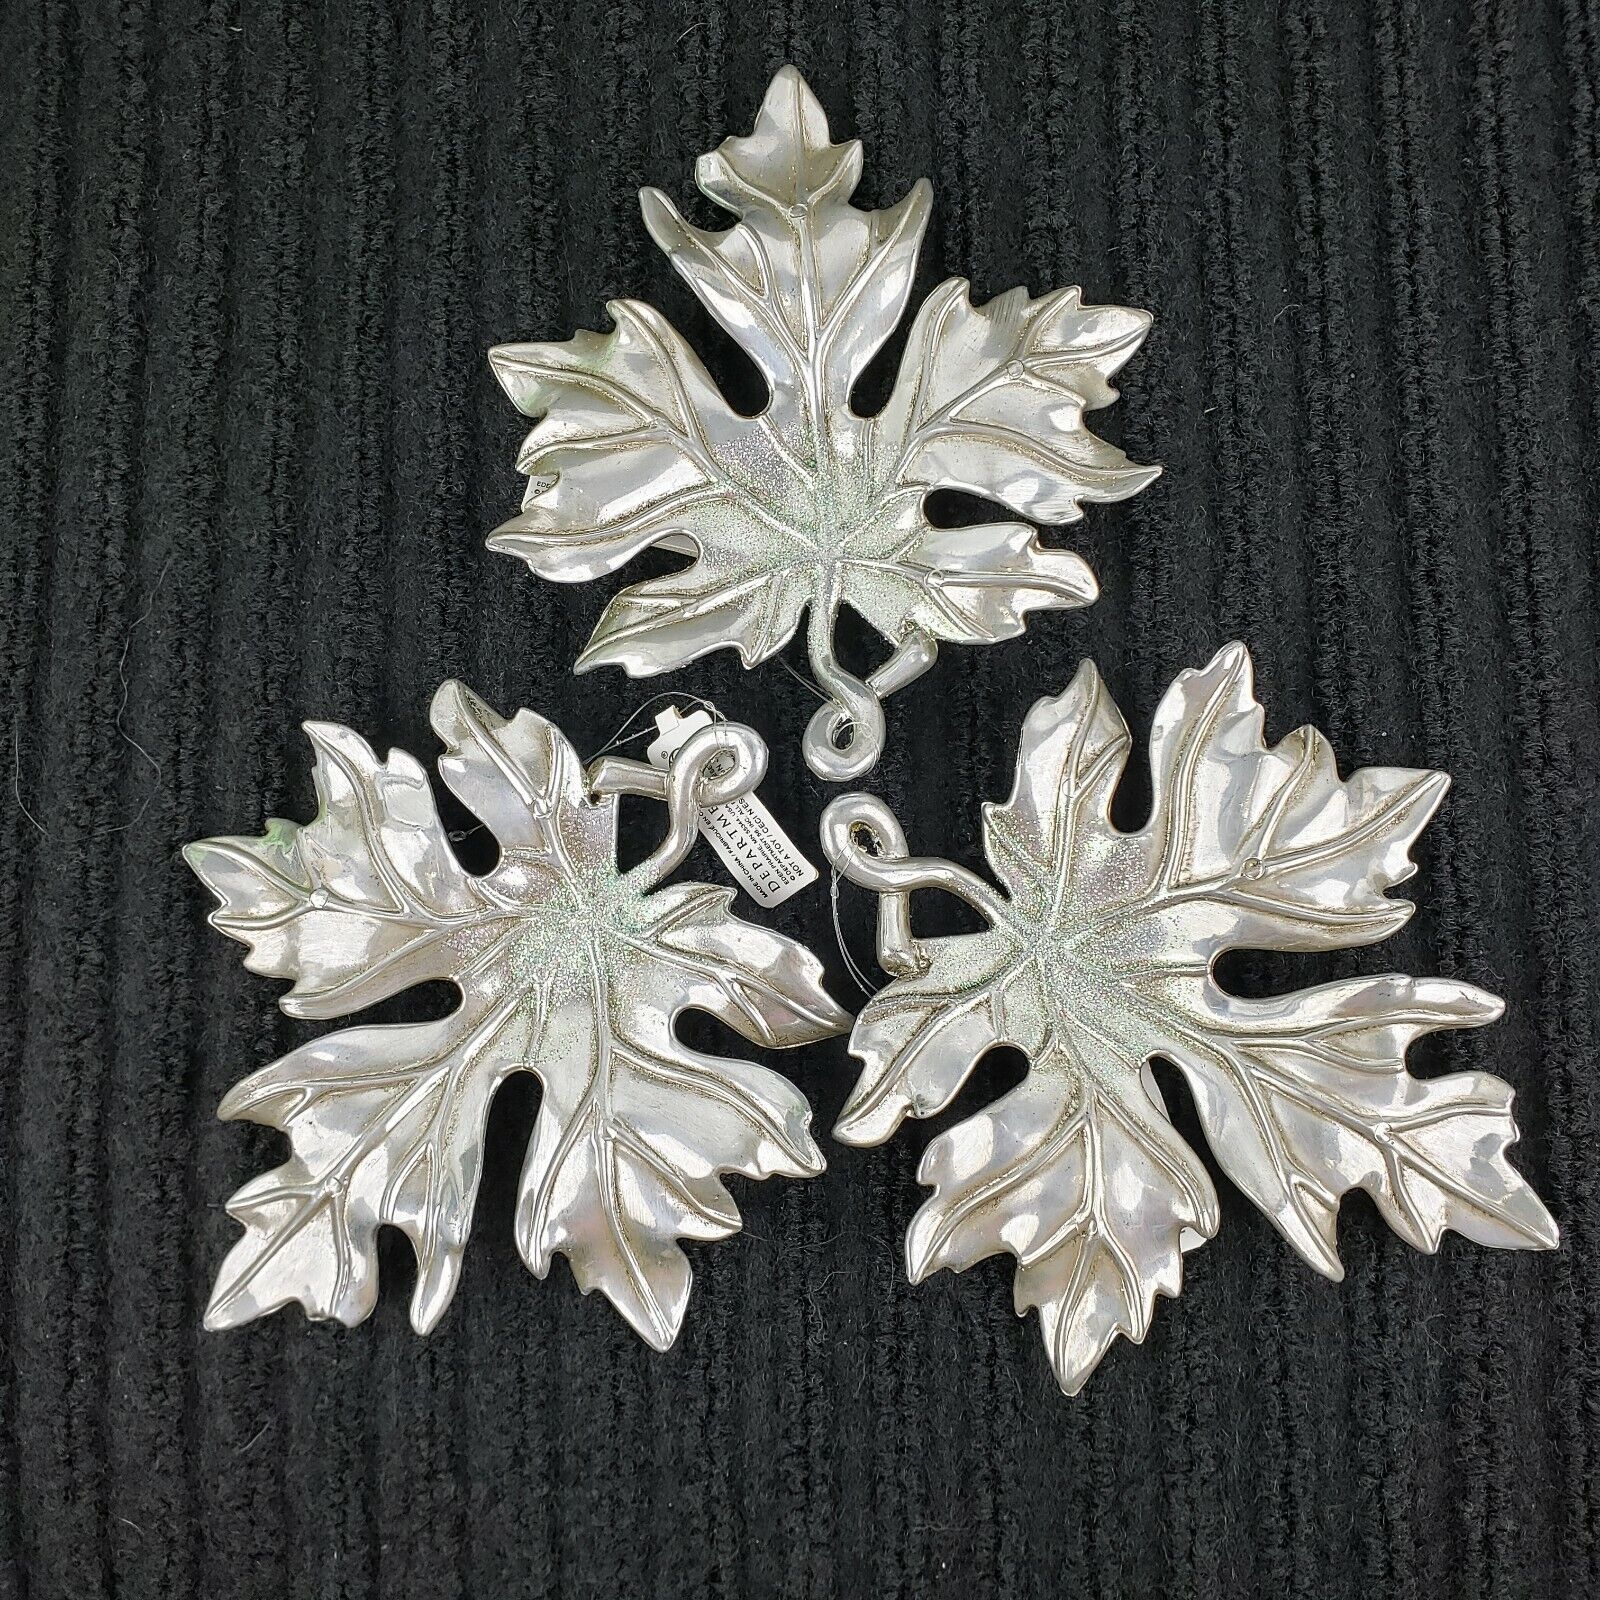 Dept 56 Leaf Ornaments Metallic Silver Over Plastic-Glitter Accent-Antiqued Look